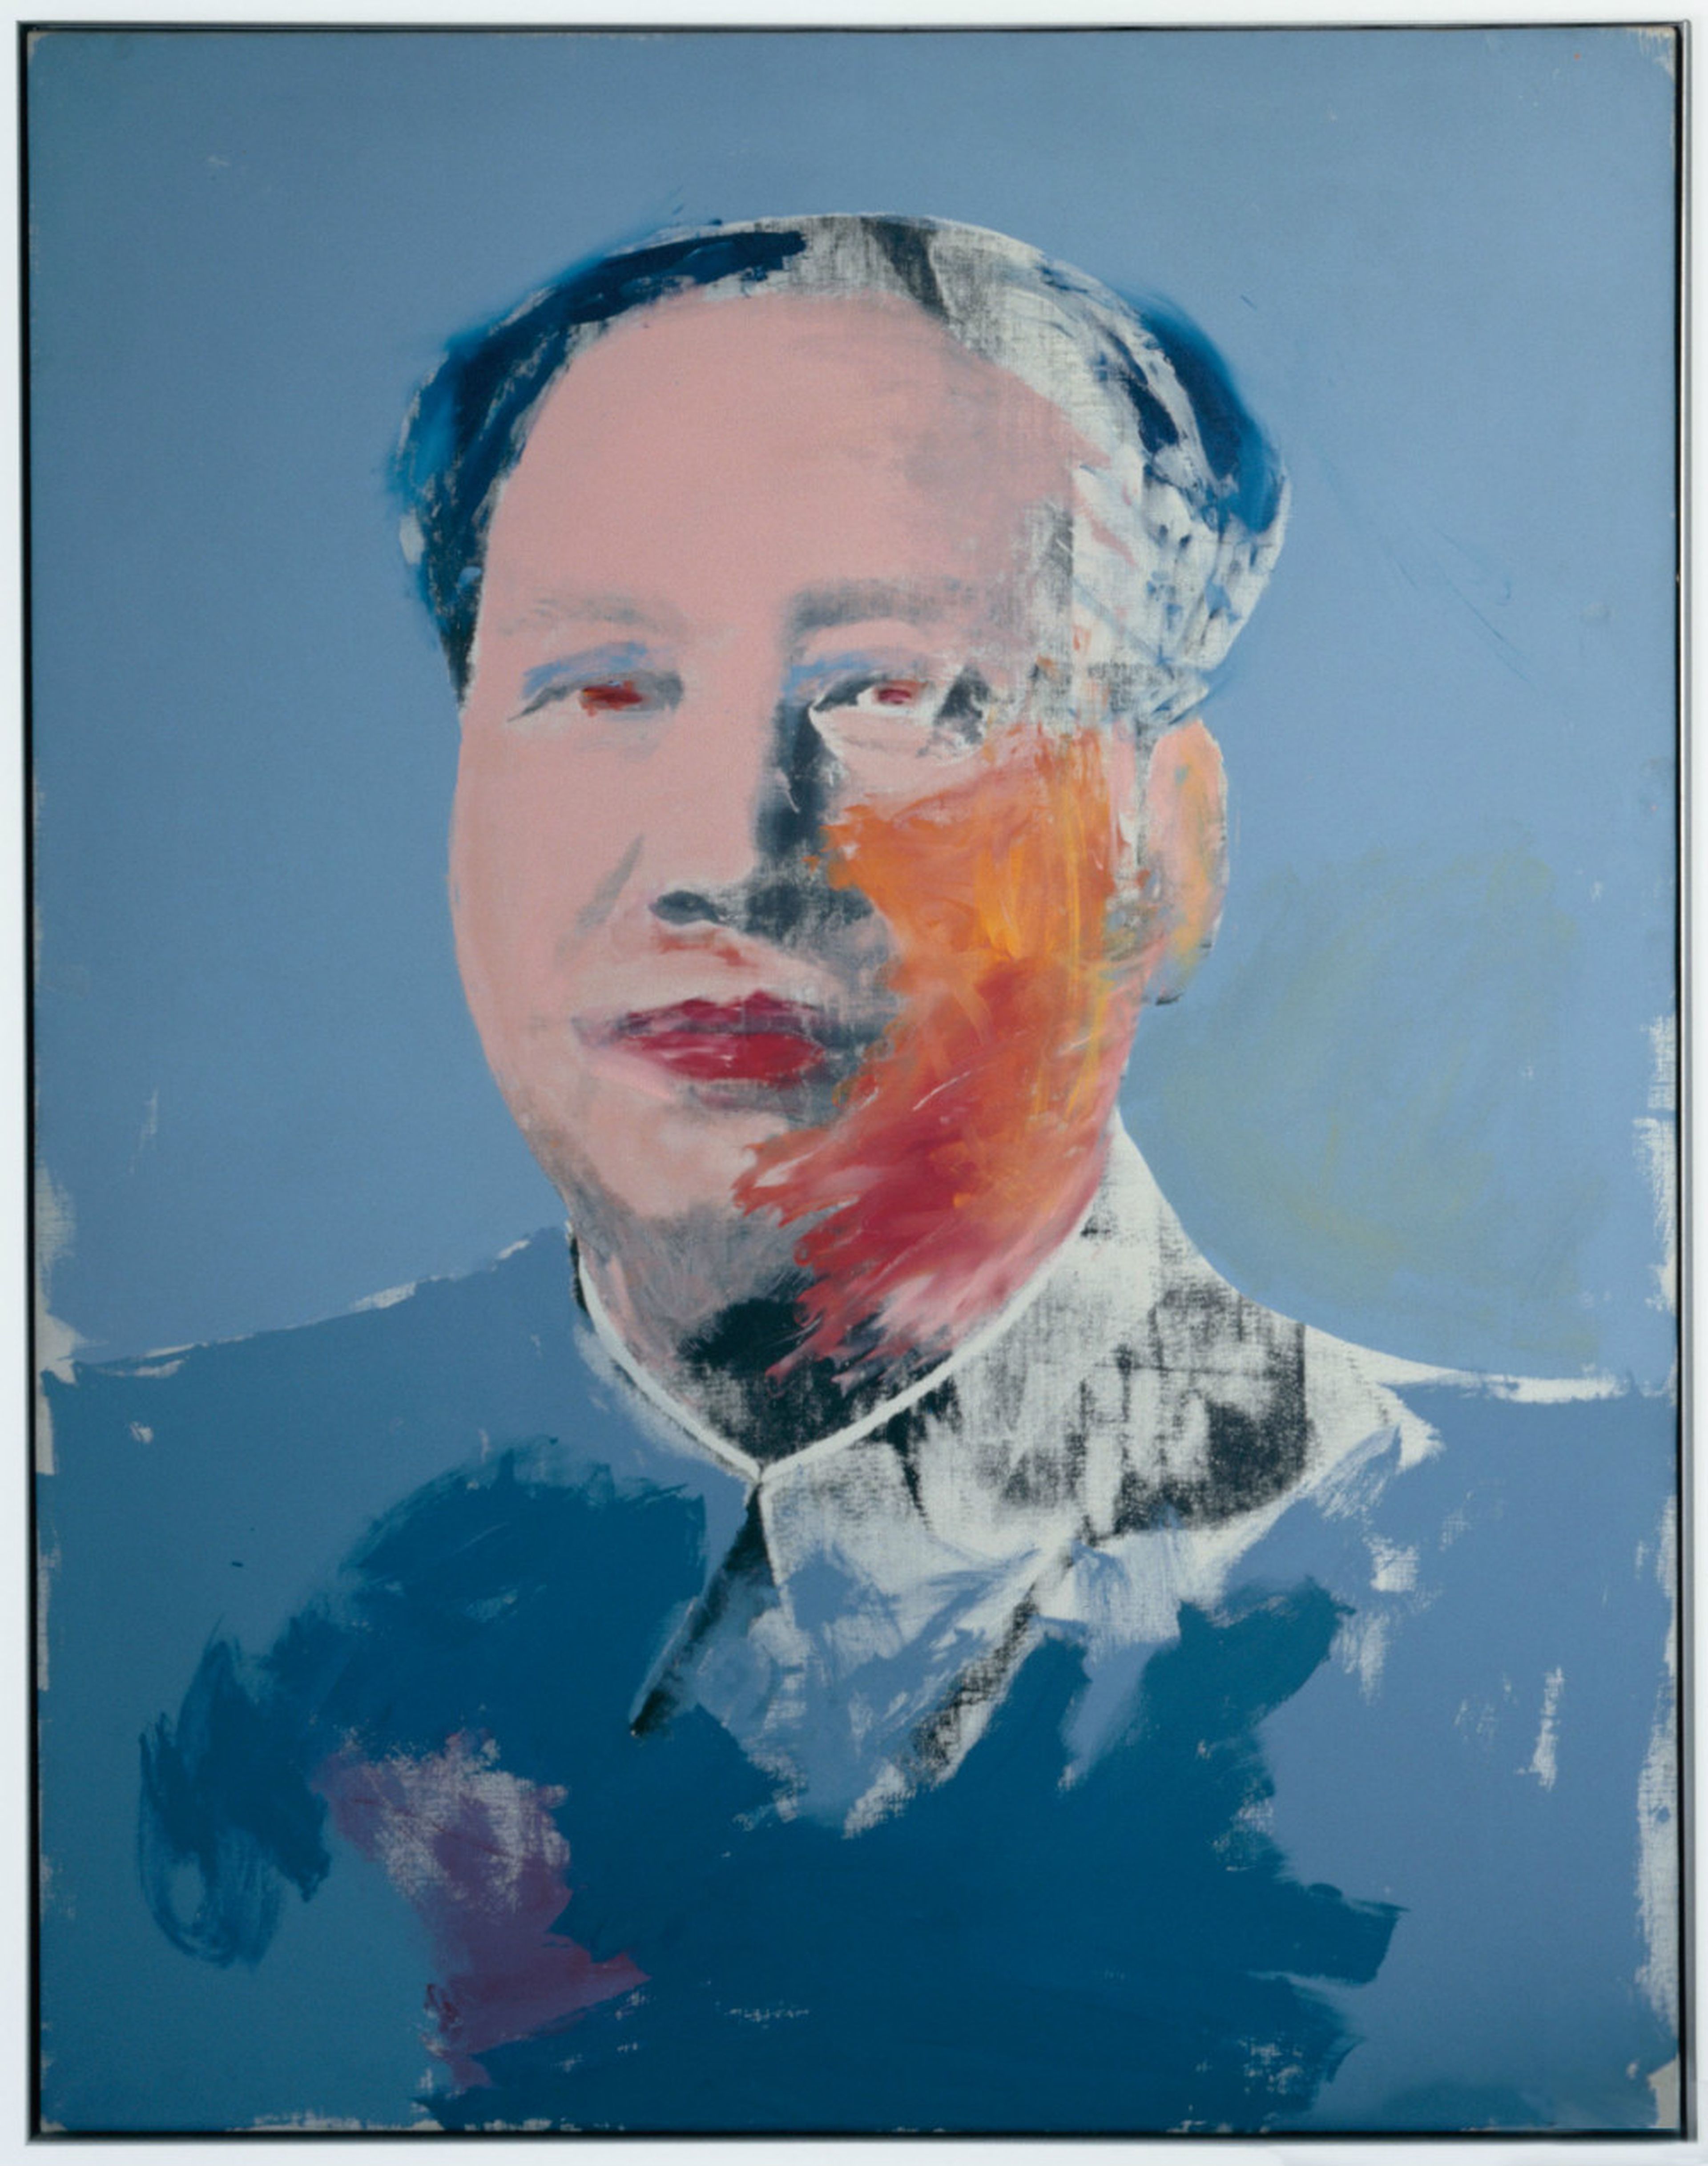 Warhol seleccionó una única imagen del líder comunista chino Mao Zedong, aprovechando la polémica mediática que rodeó la visita a China del presidente Richard Nixon en febrero de 1972.